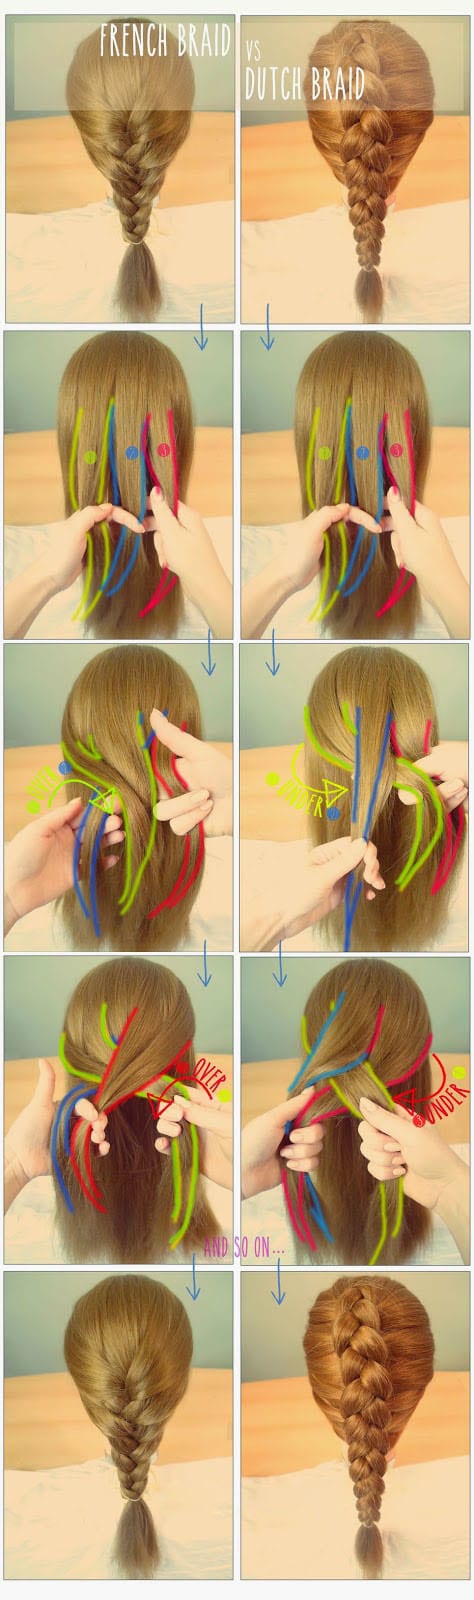 French braid vs Dutch braid (With Step-By-Step Picture Guide) – Hair Queenie